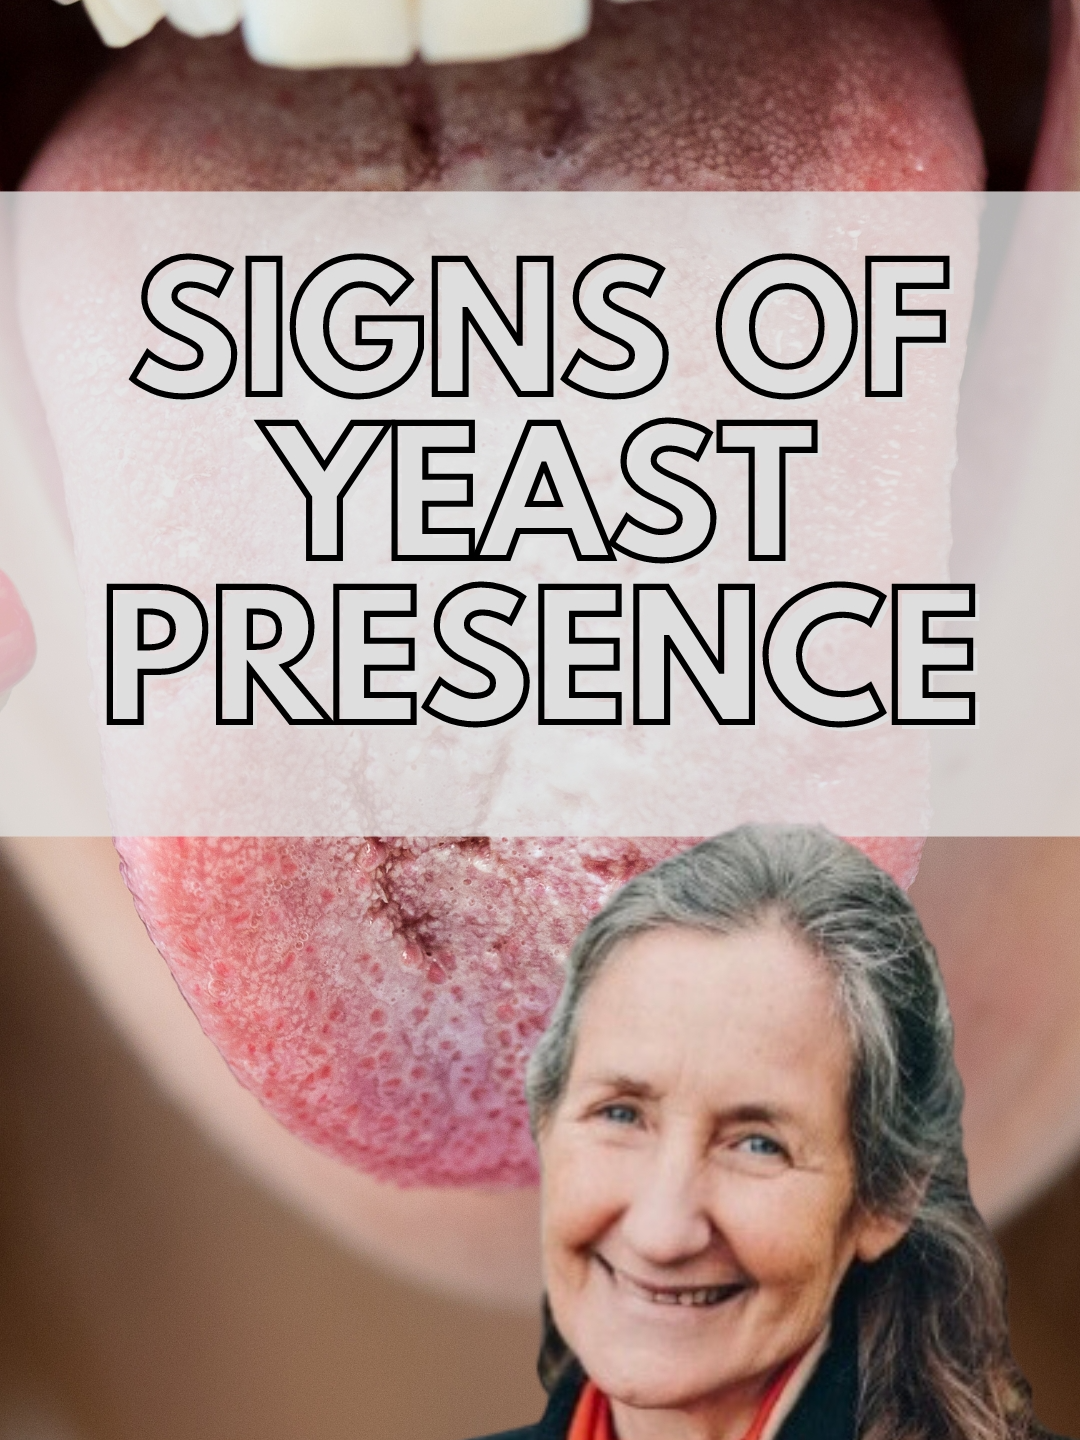 Signs of yeast presence #barbaraoneill #eczema #psiorasis #yeastinfection